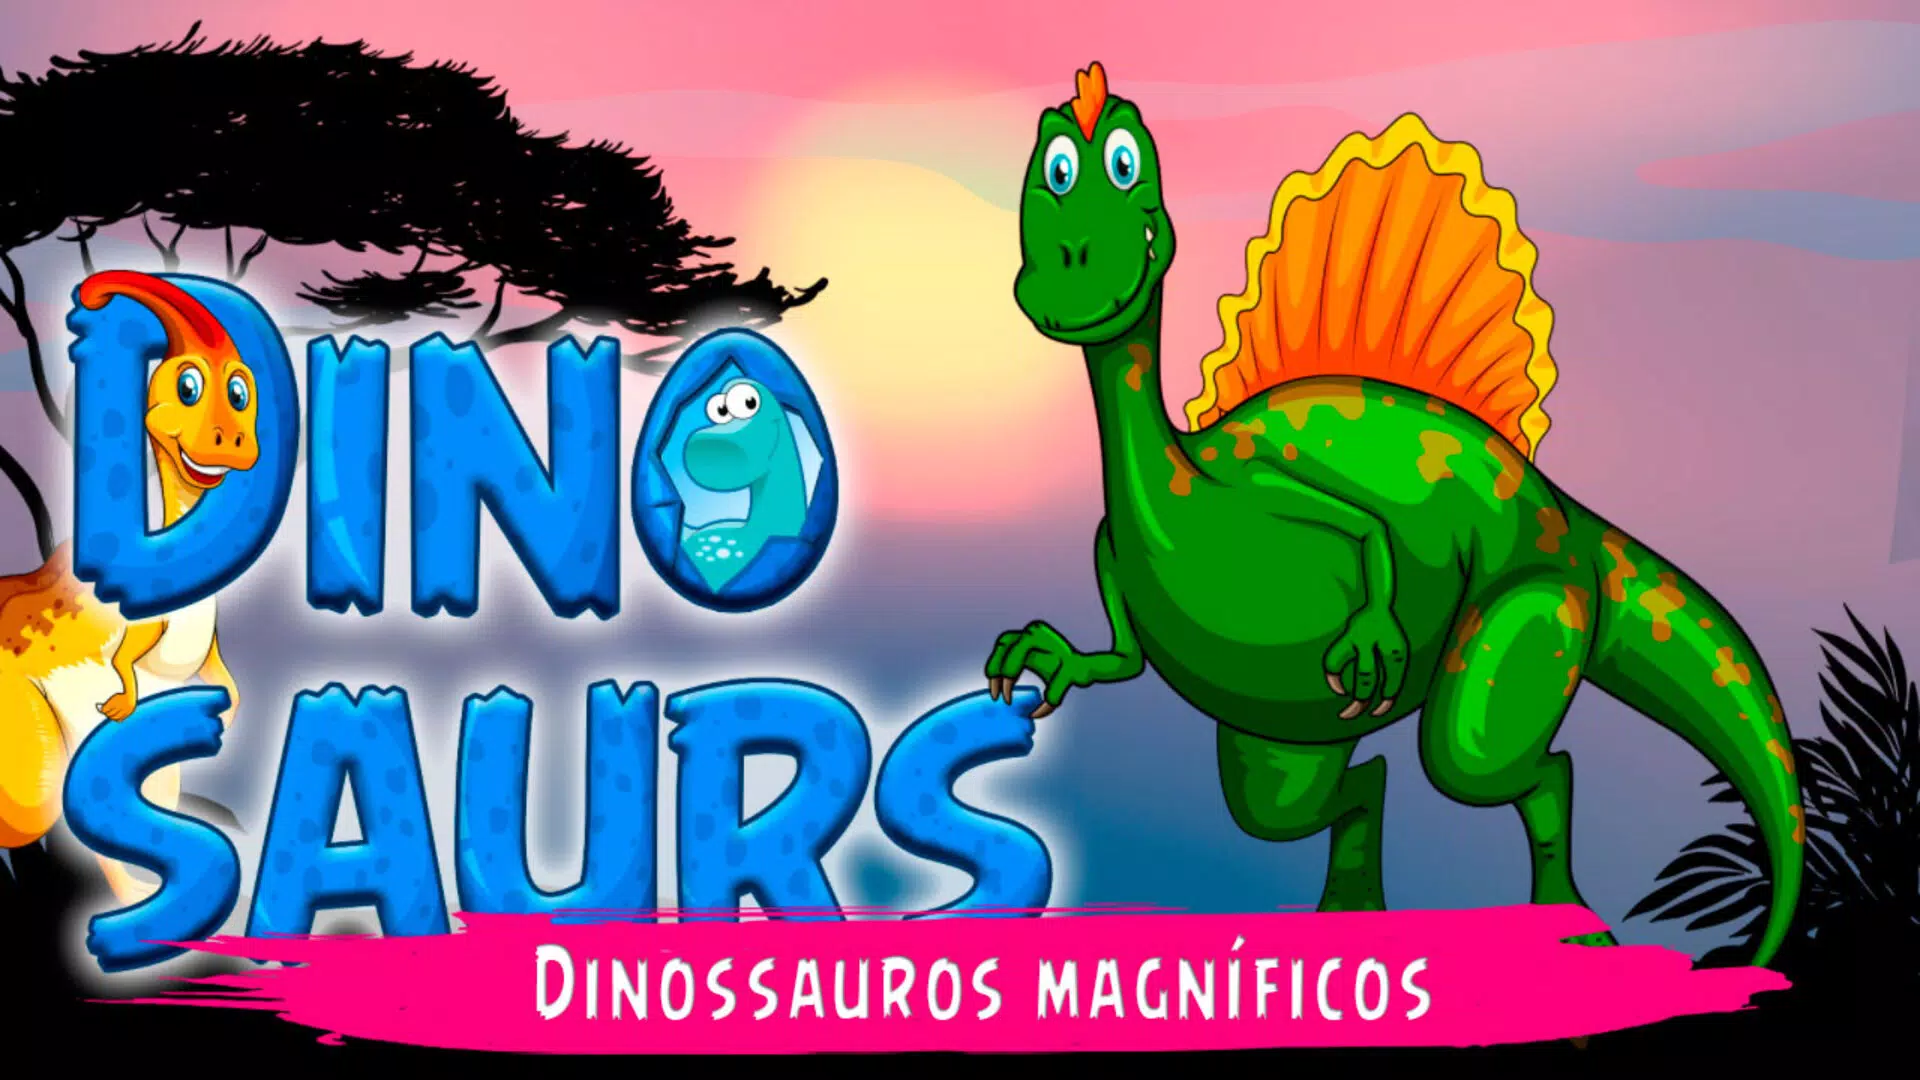 Dinosaur cartoon jogar um jogo